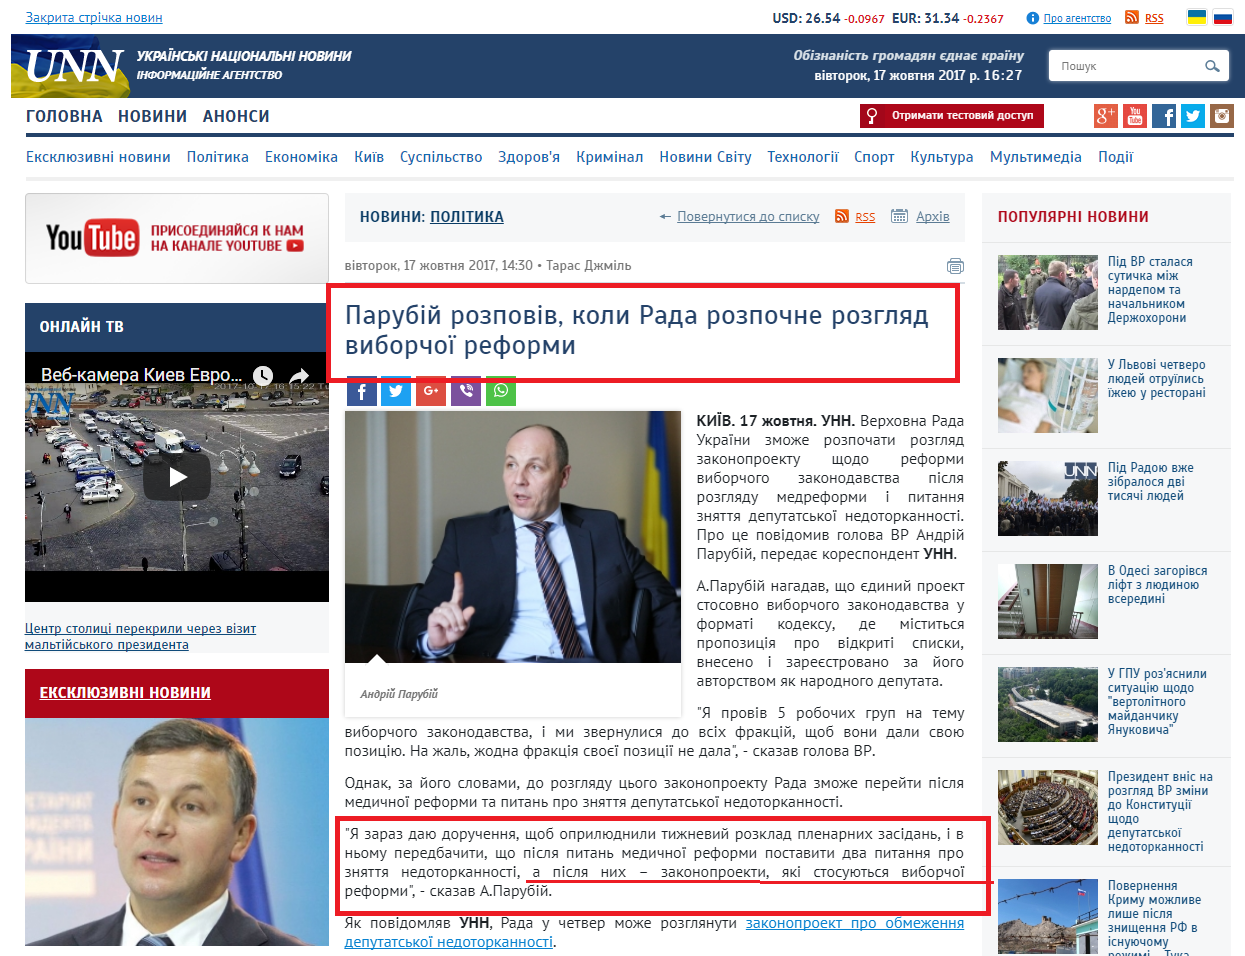 http://www.unn.com.ua/uk/news/1693452-parubii-rozpoviv-koly-rada-rozpochne-rozhliad-vyborchoi-reformy